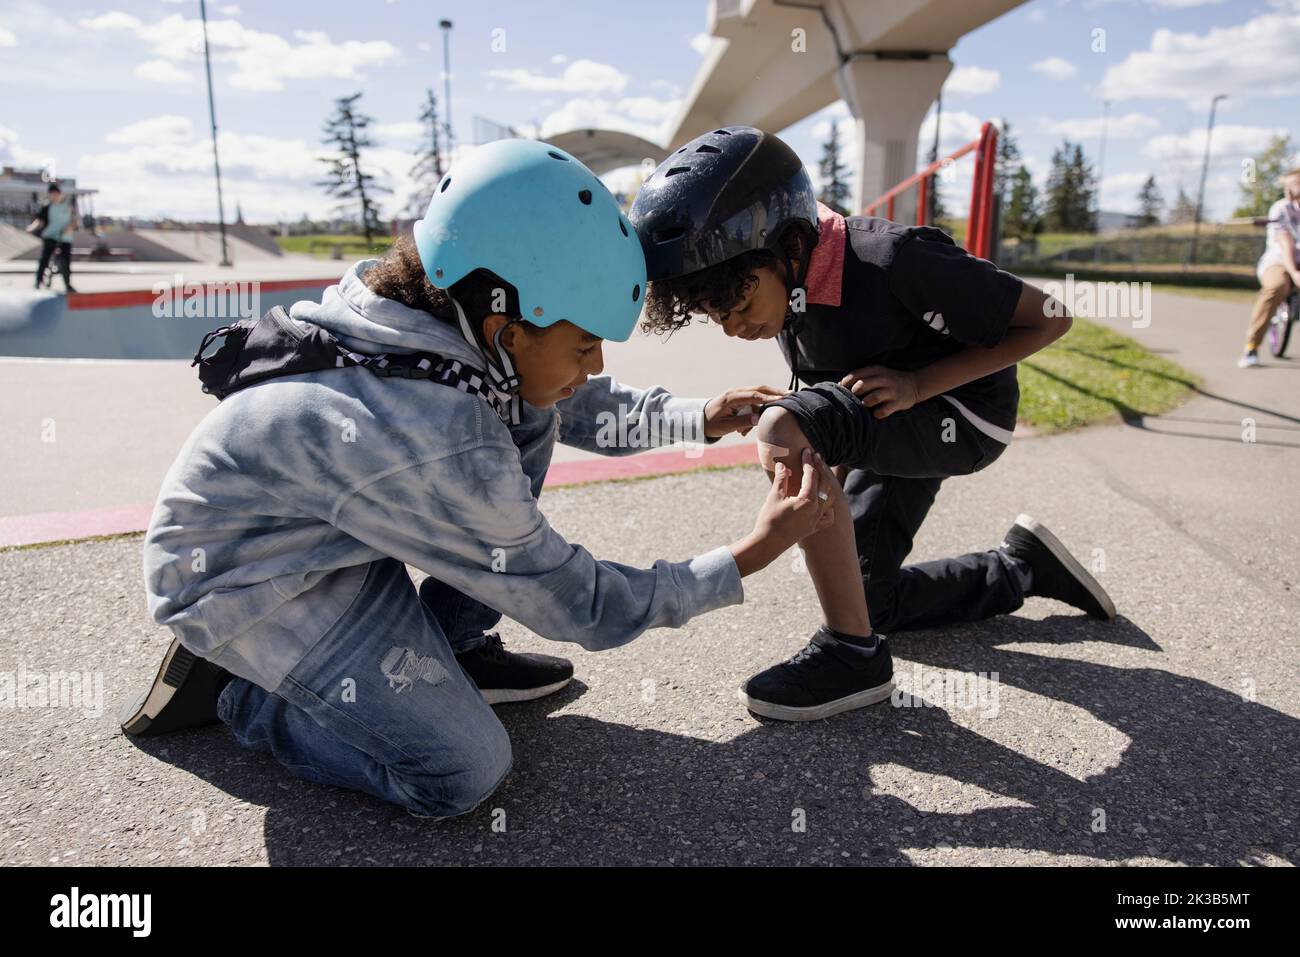 Boy checking brother's injured knee in skatepark Stock Photo